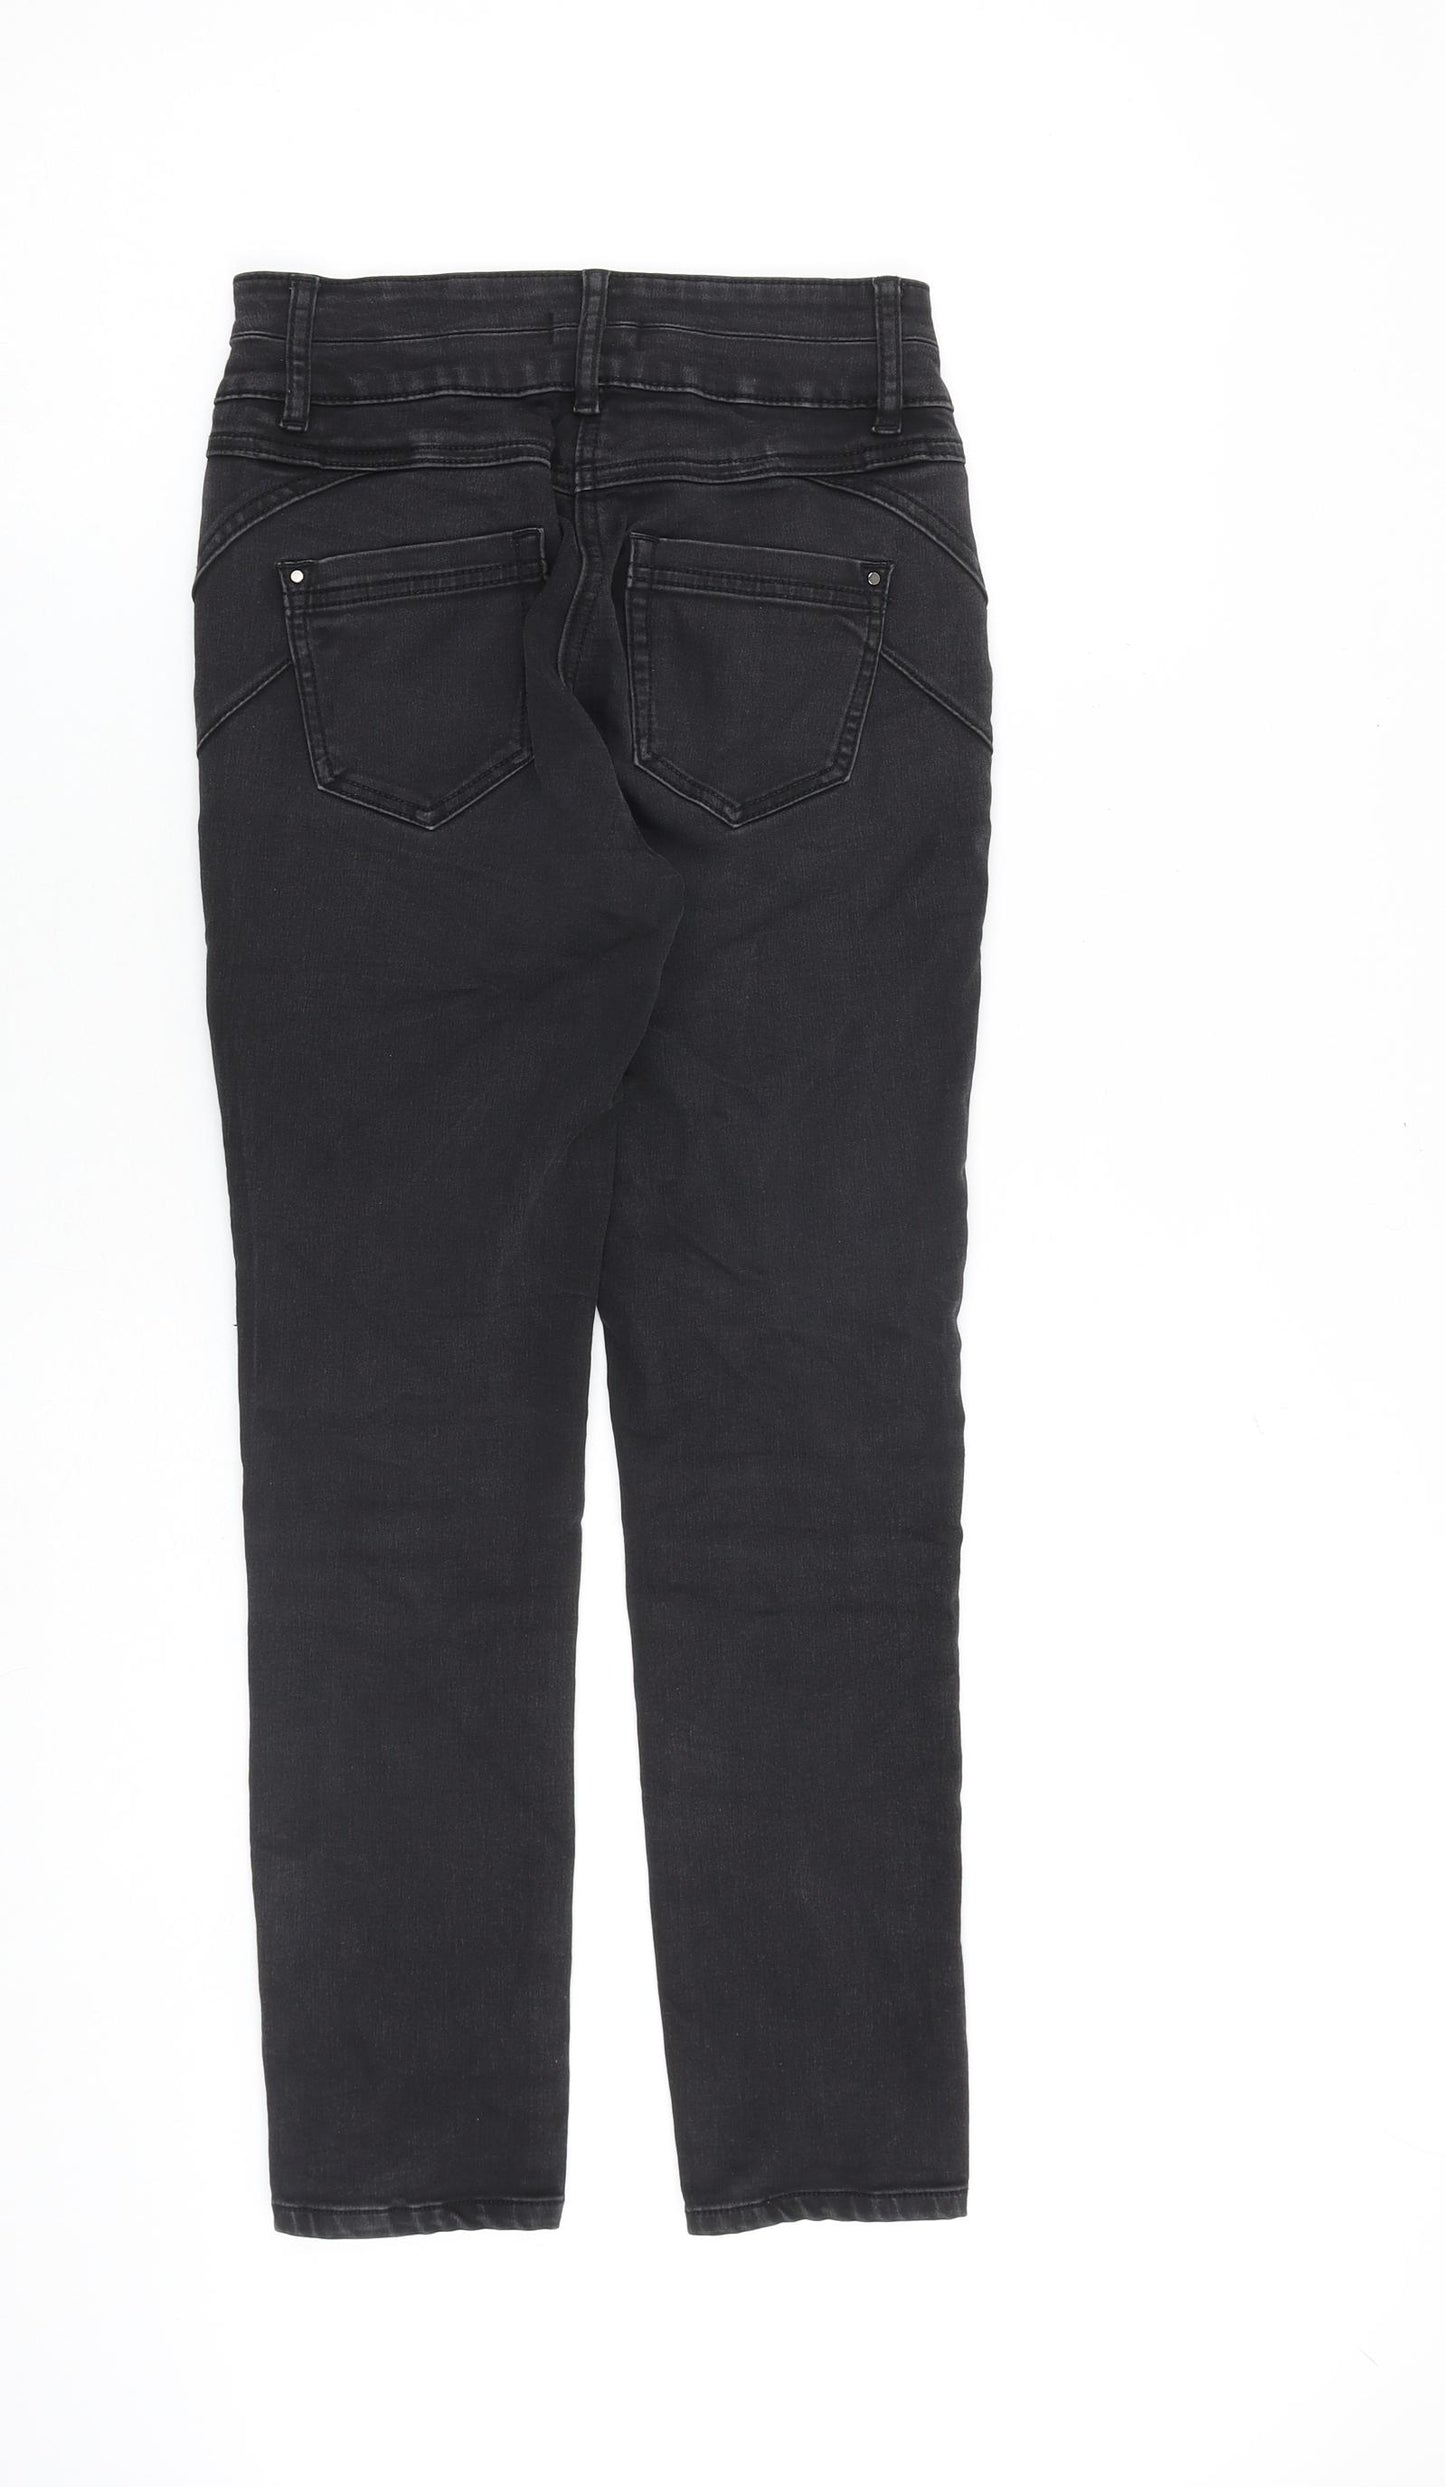 M&Co Womens Grey Cotton Skinny Jeans Size 8 L27 in Regular Zip